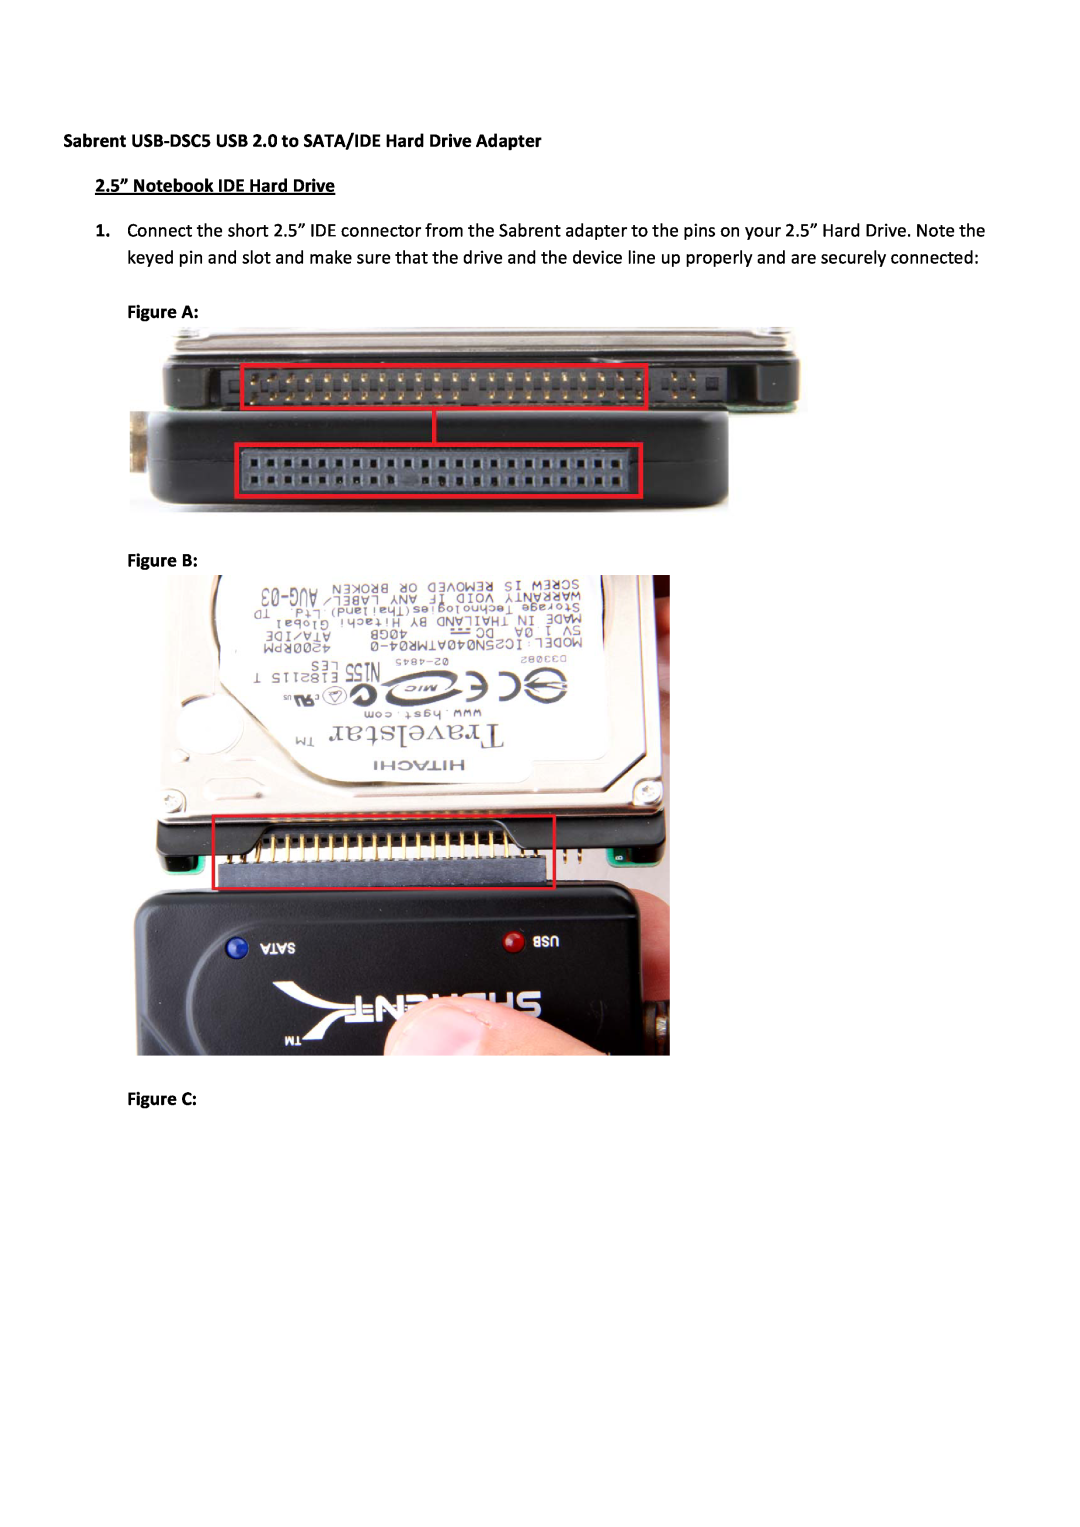 Sabrent USBDSC5 manual Sabrent USB‐DSC5 USB 2.0 to SATA/IDE Hard Drive Adapter, 2.5” Notebook IDE Hard Drive 